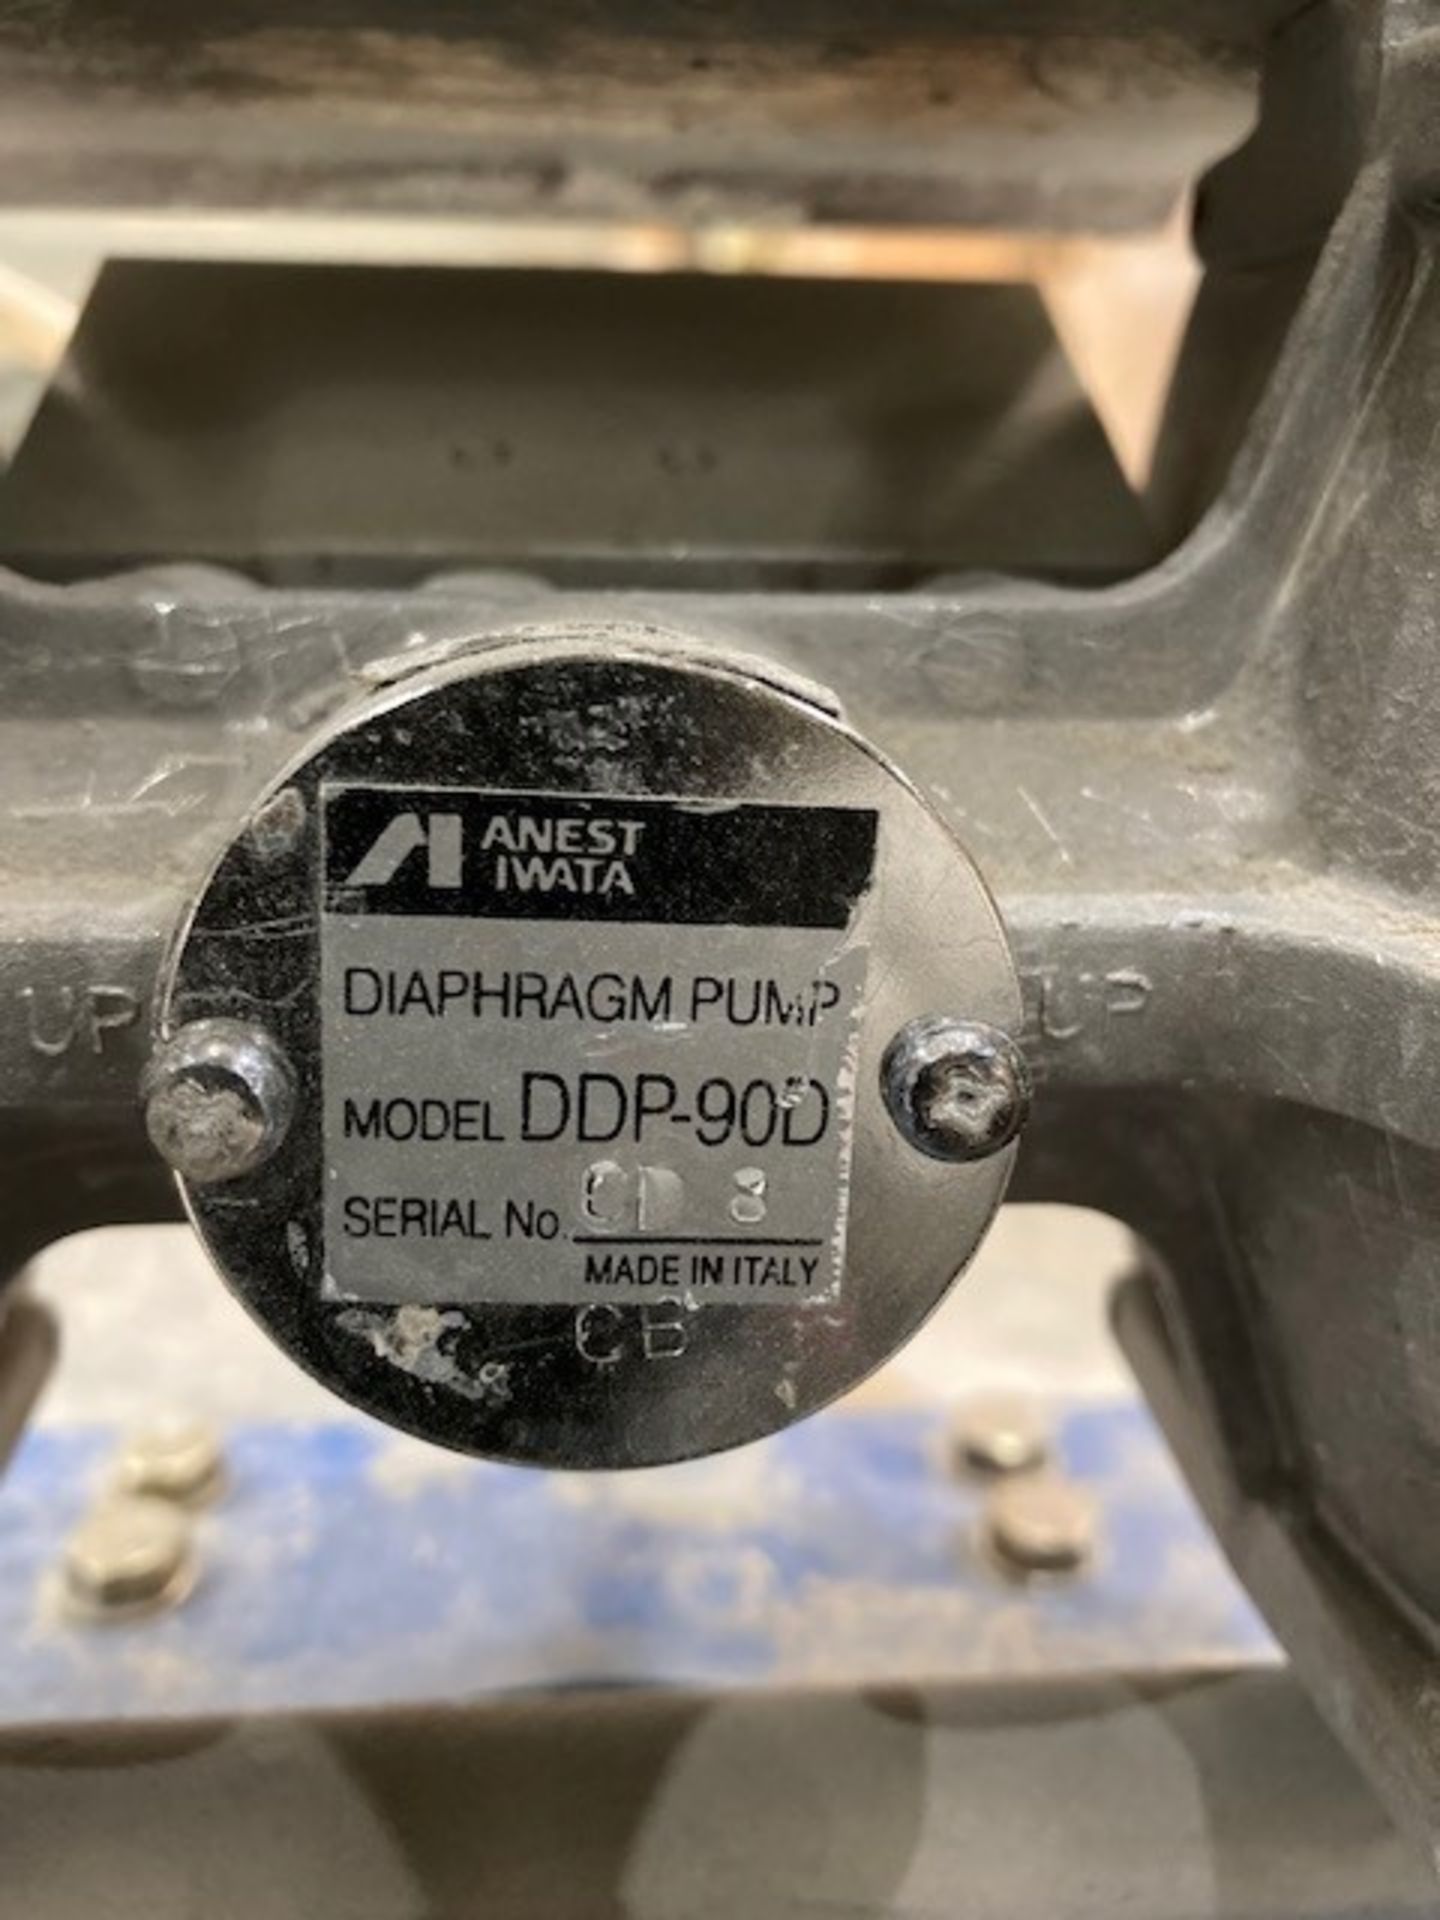 Anwest Iwata DDP-90D diaphragm pump - Image 5 of 5